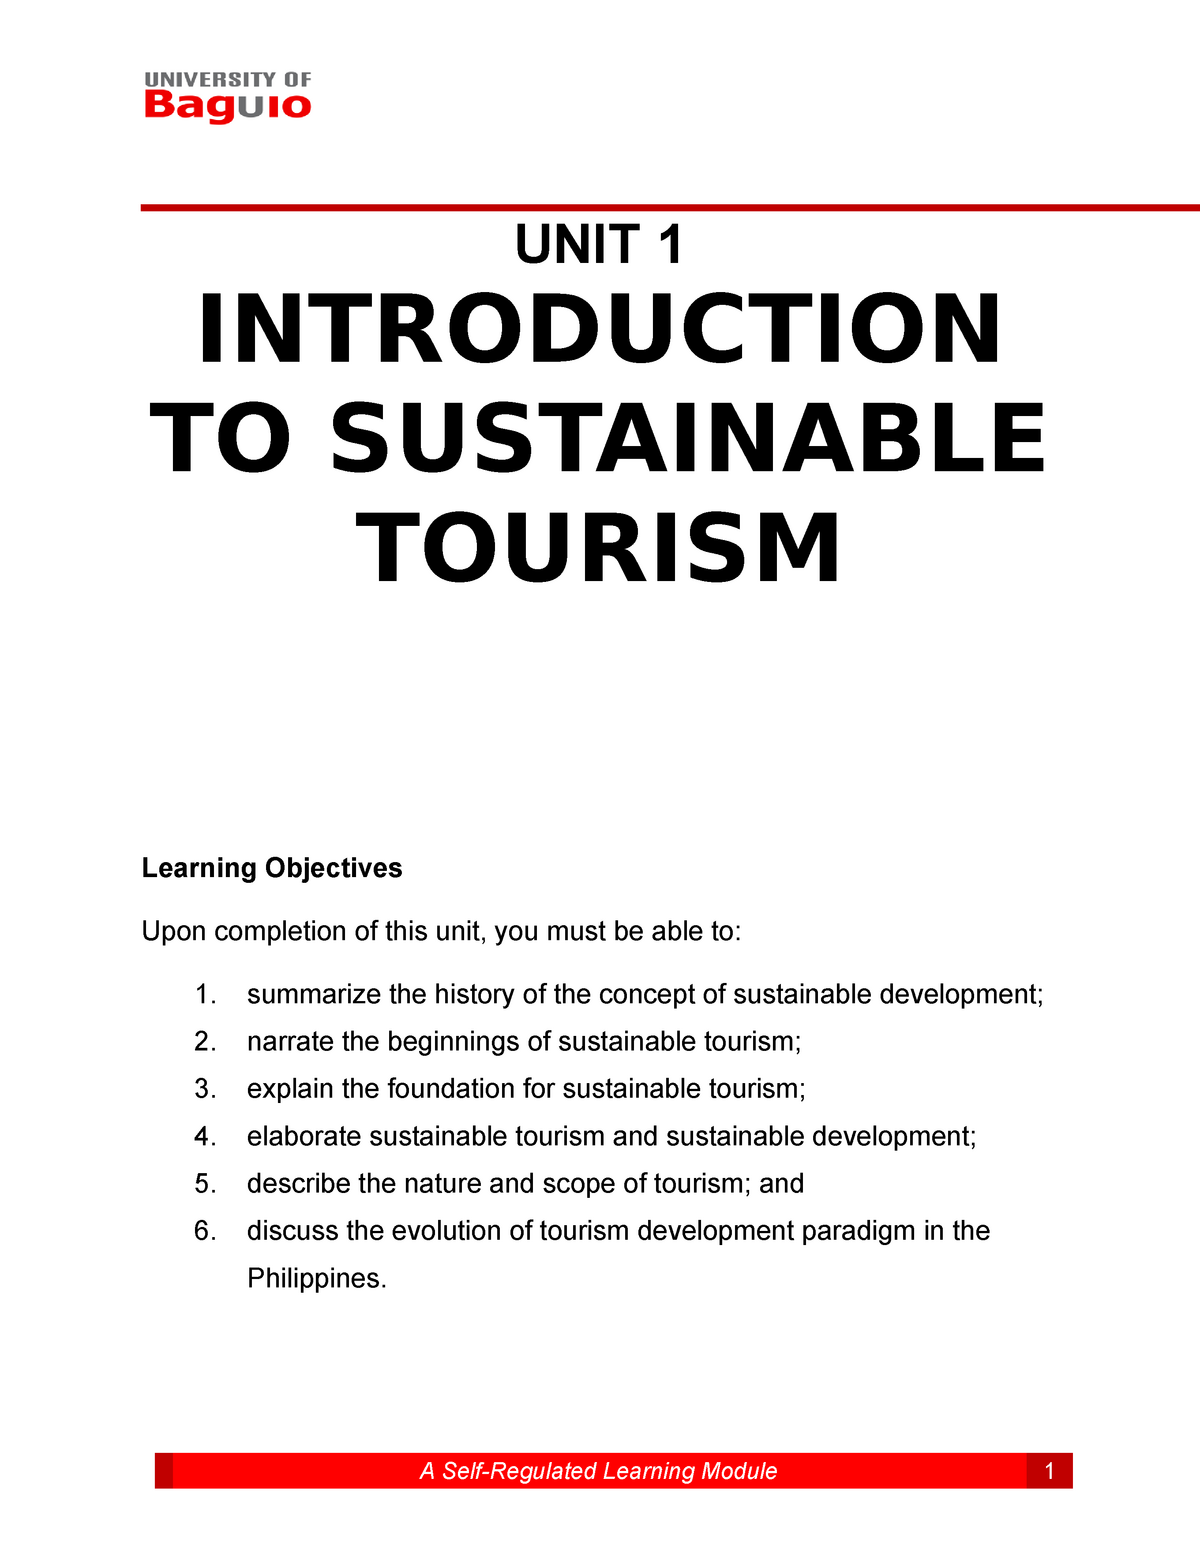 sustainable tourism academic essay